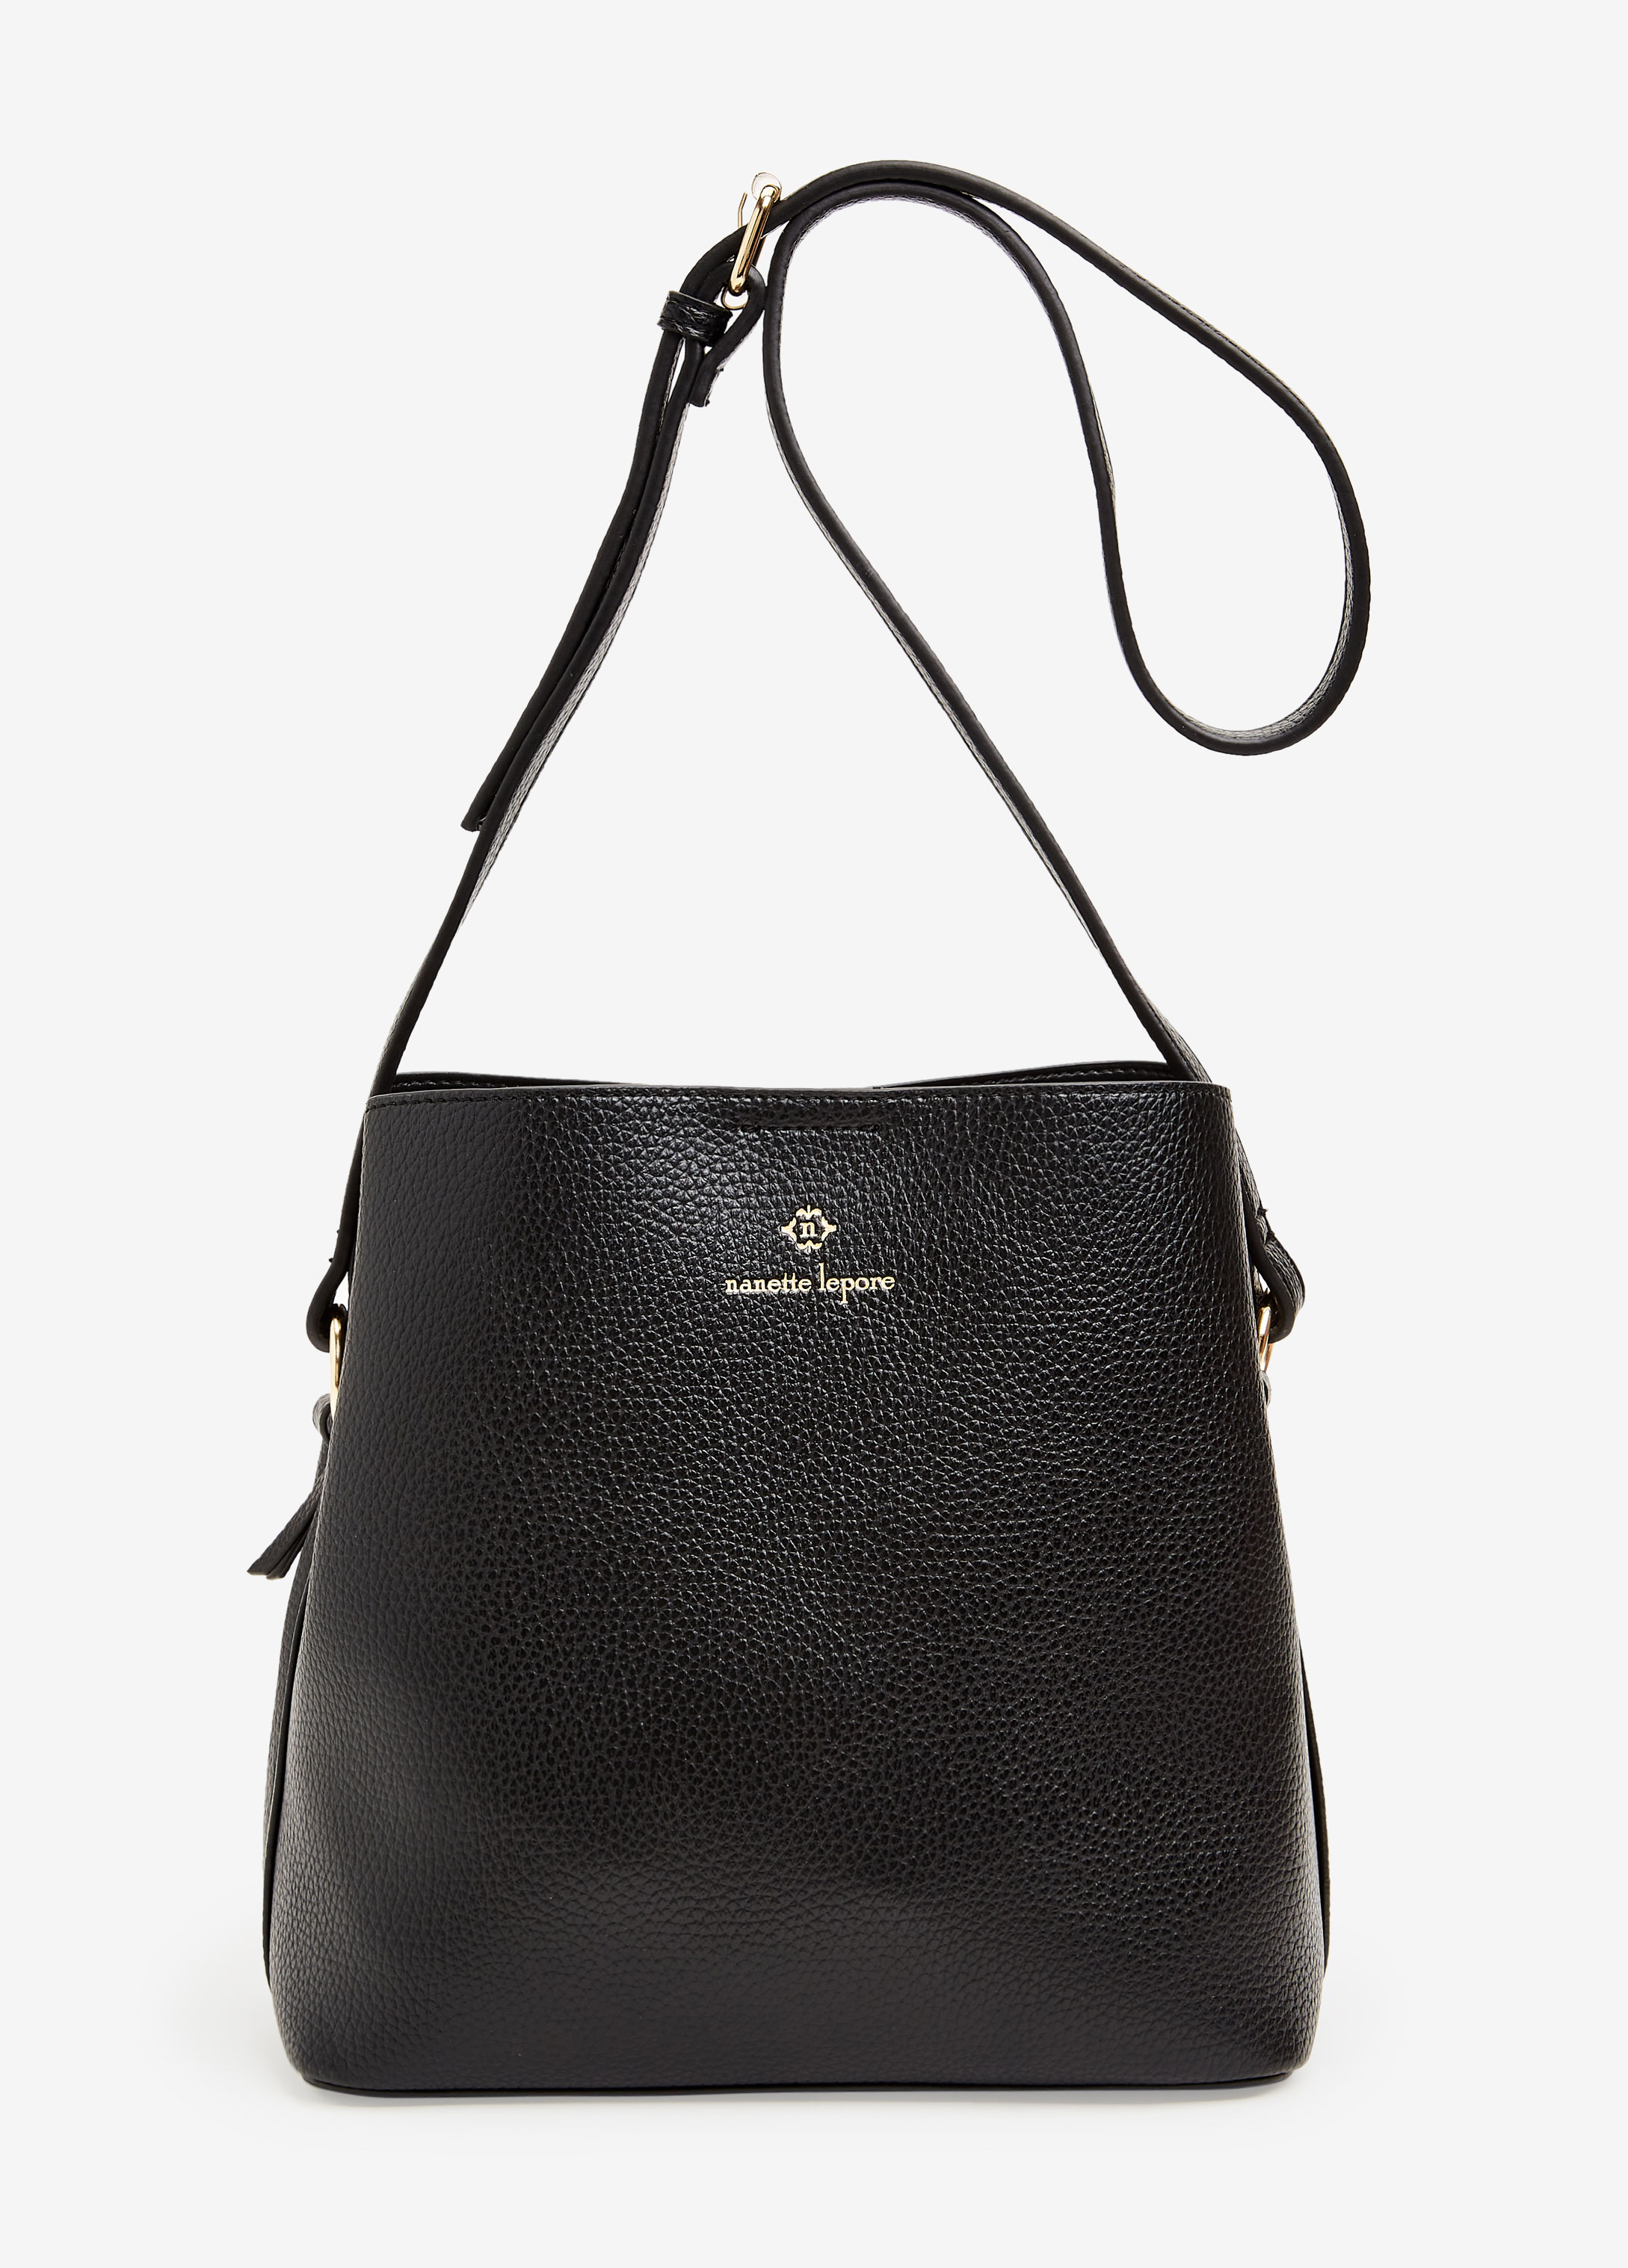 🎀👜🎀 NANETTE LEPORE BAGS AT MARSHALLS / GIFT IDEAS #handbags #wallets -  YouTube